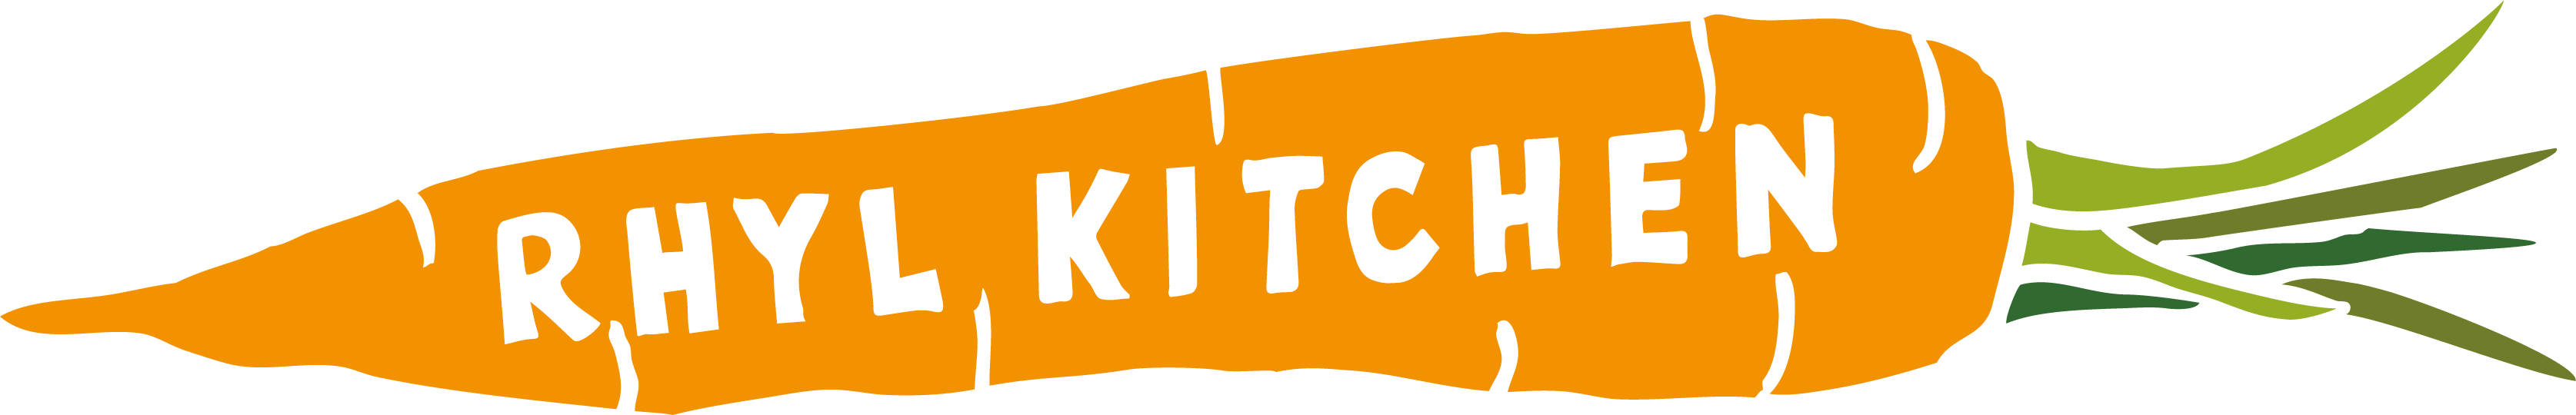 Rhyl Kitchen Classroom logo